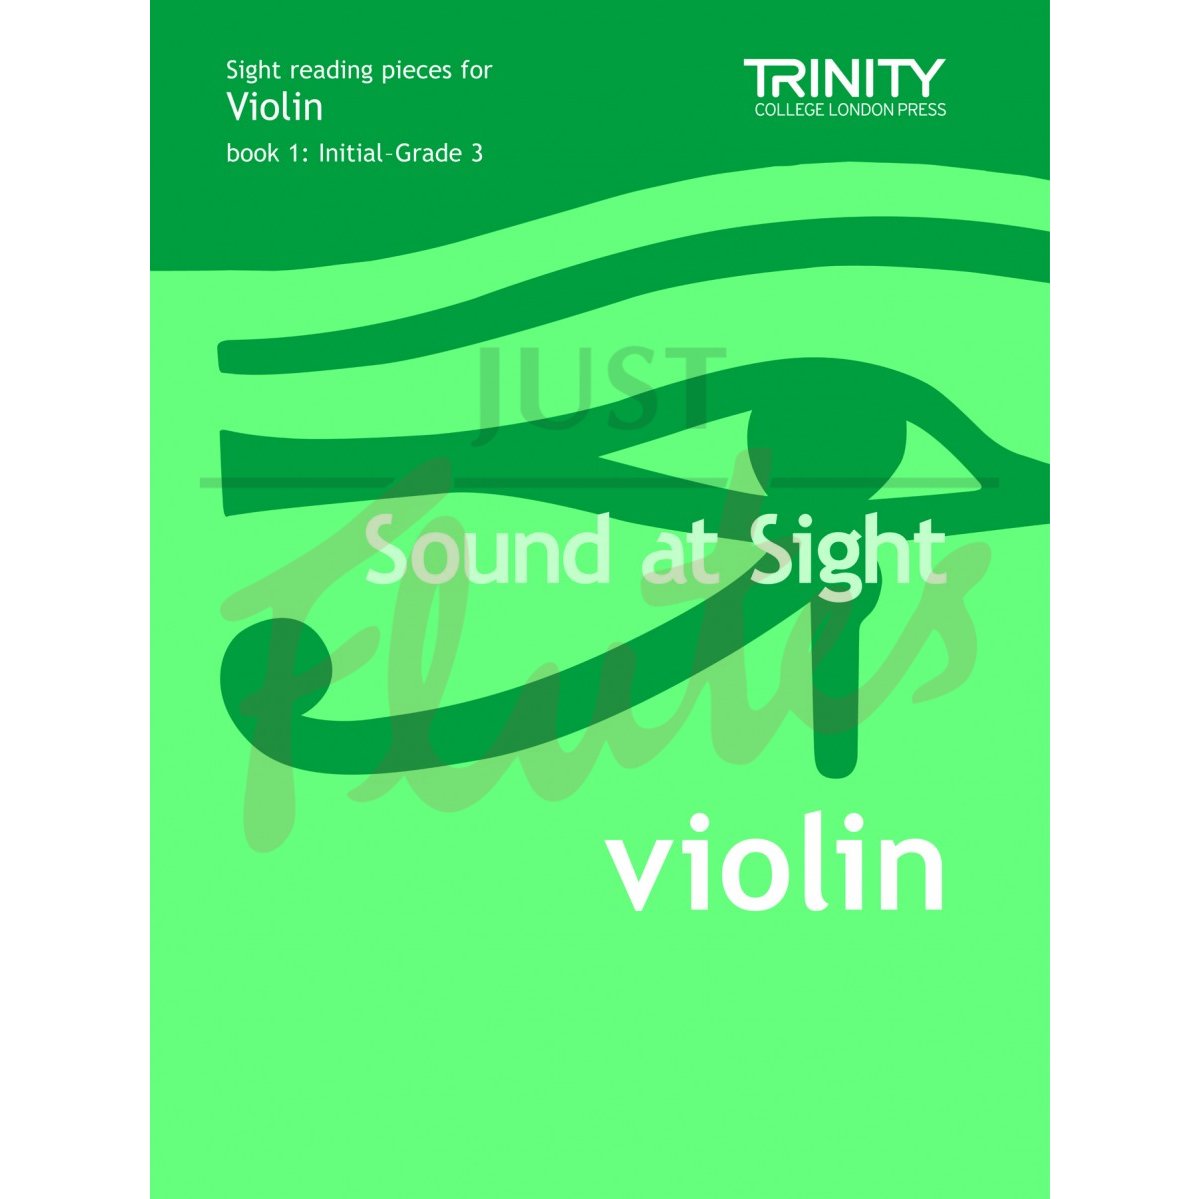 Sound At Sight [Violin] Initial-Grade 3